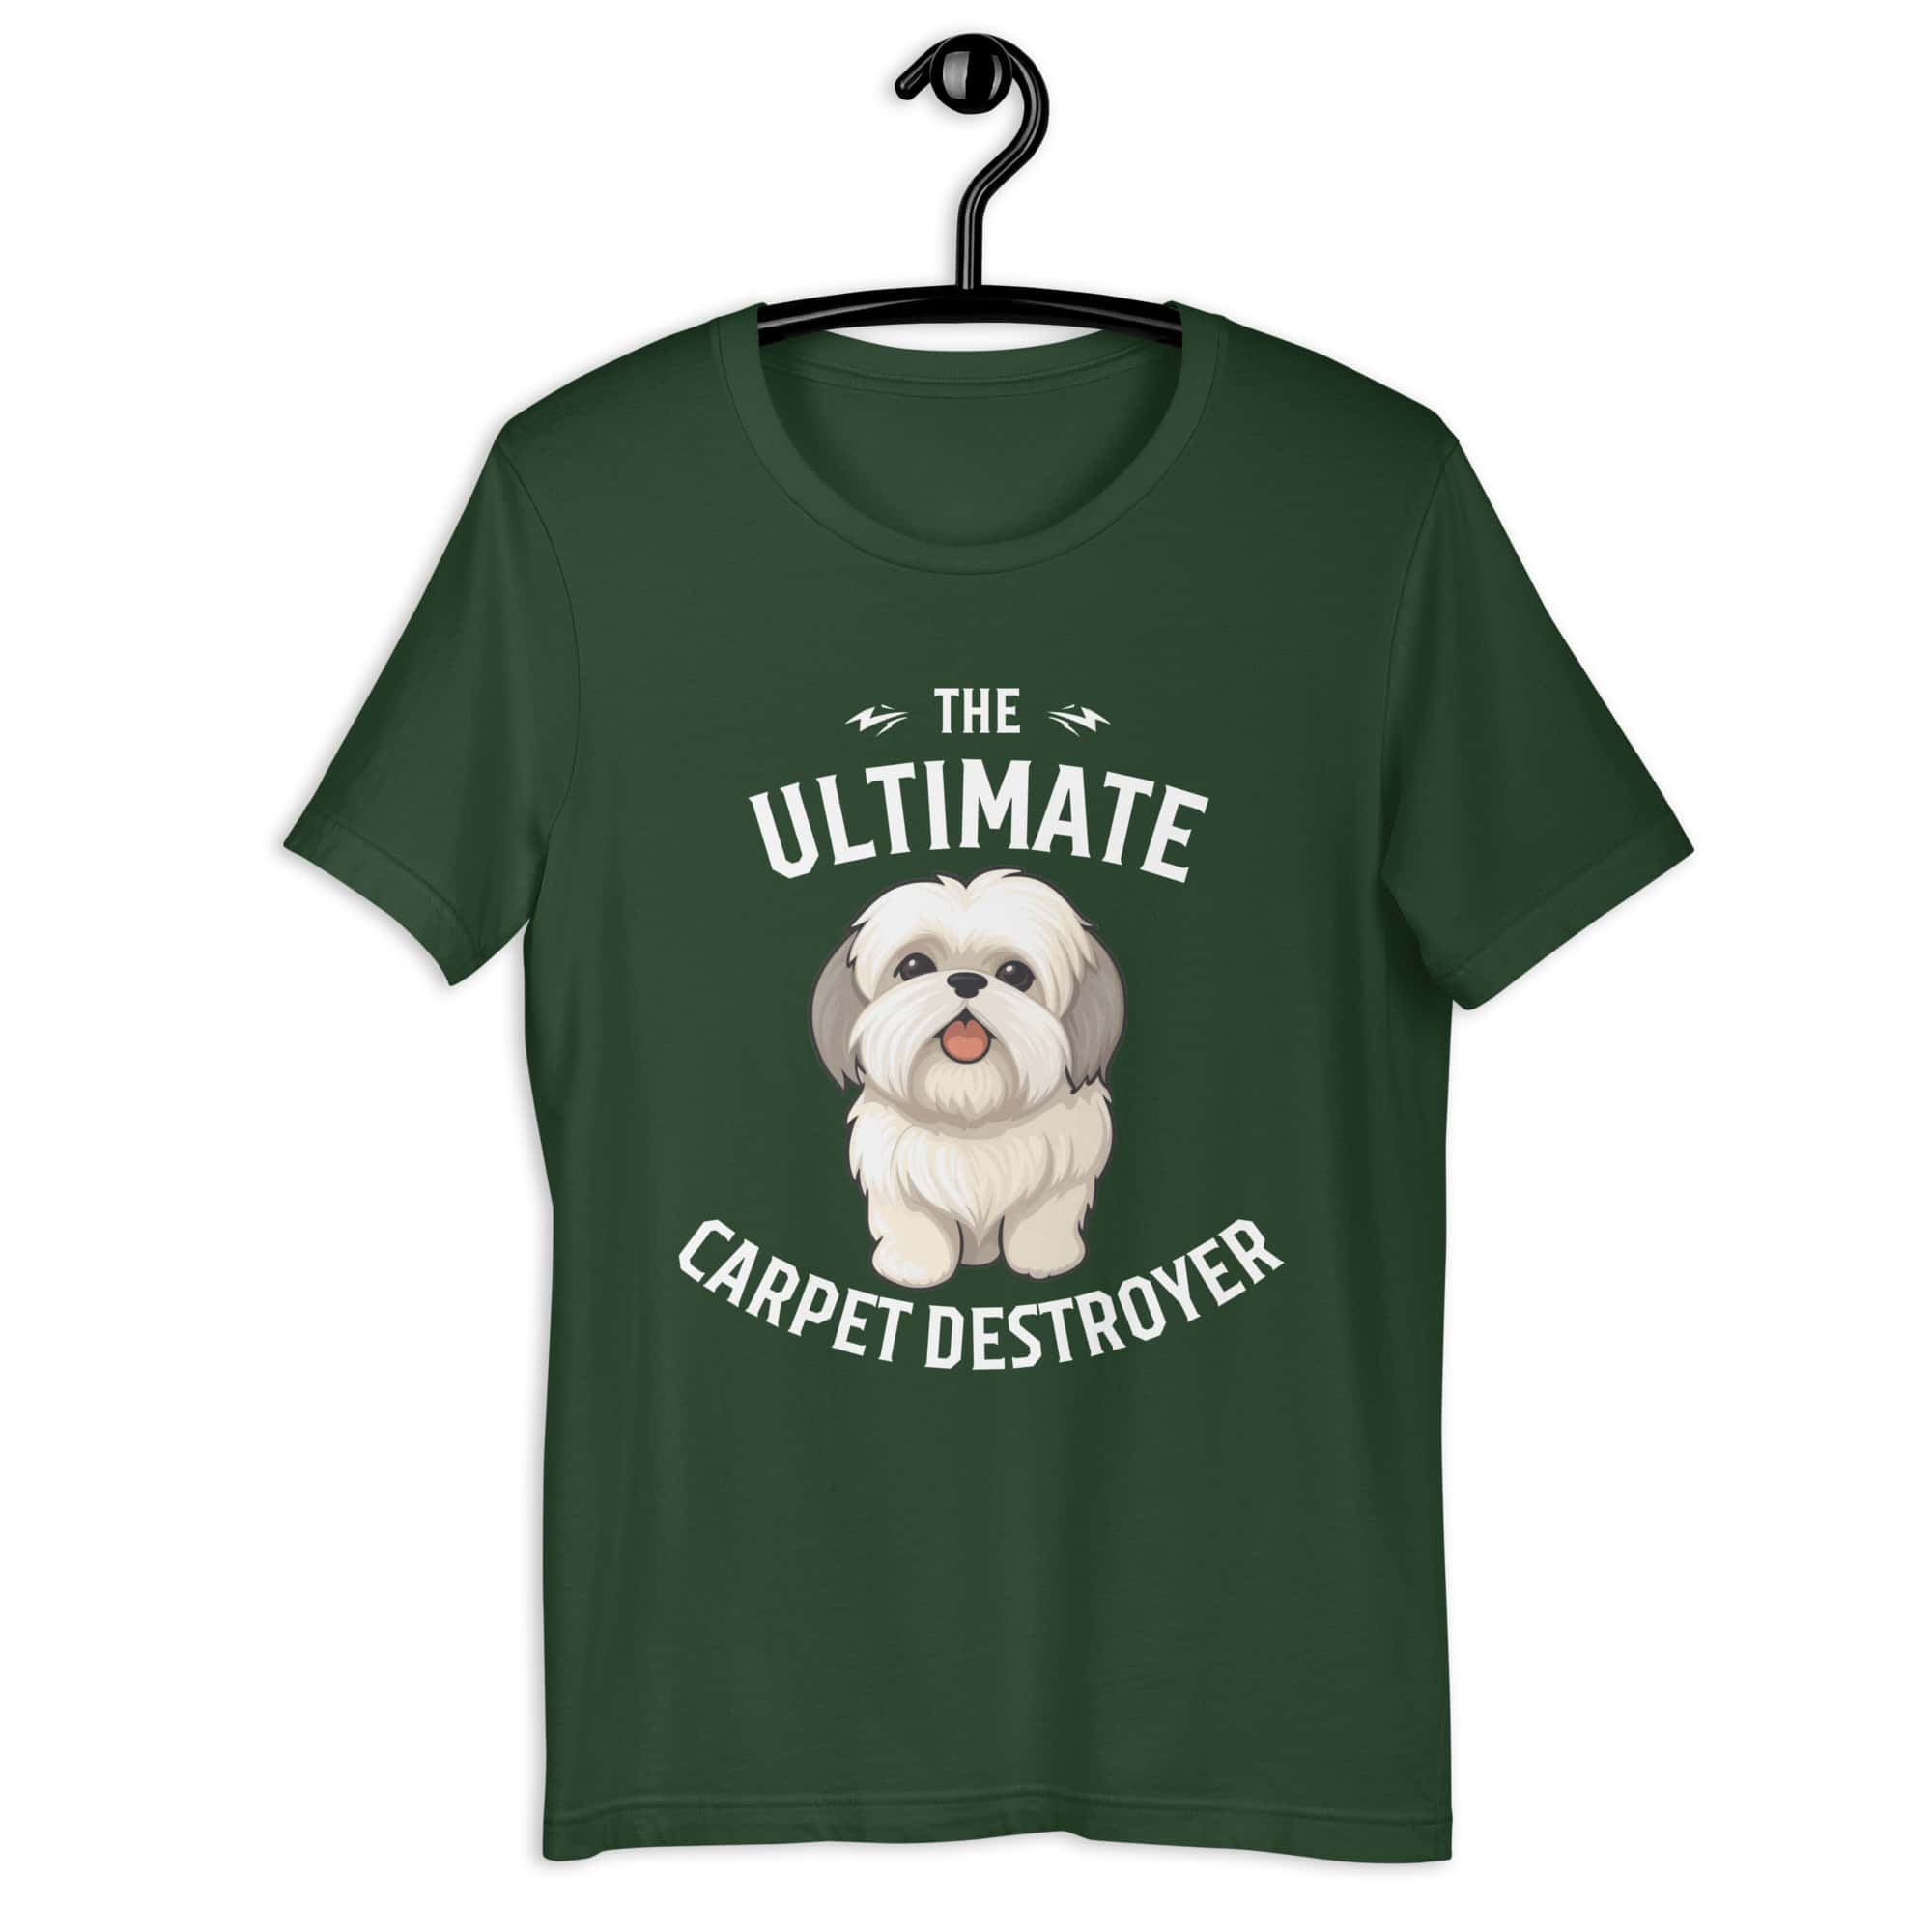 The Ultimate Carpet Destroyer Funny Shih Tzu Unisex T-Shirt green